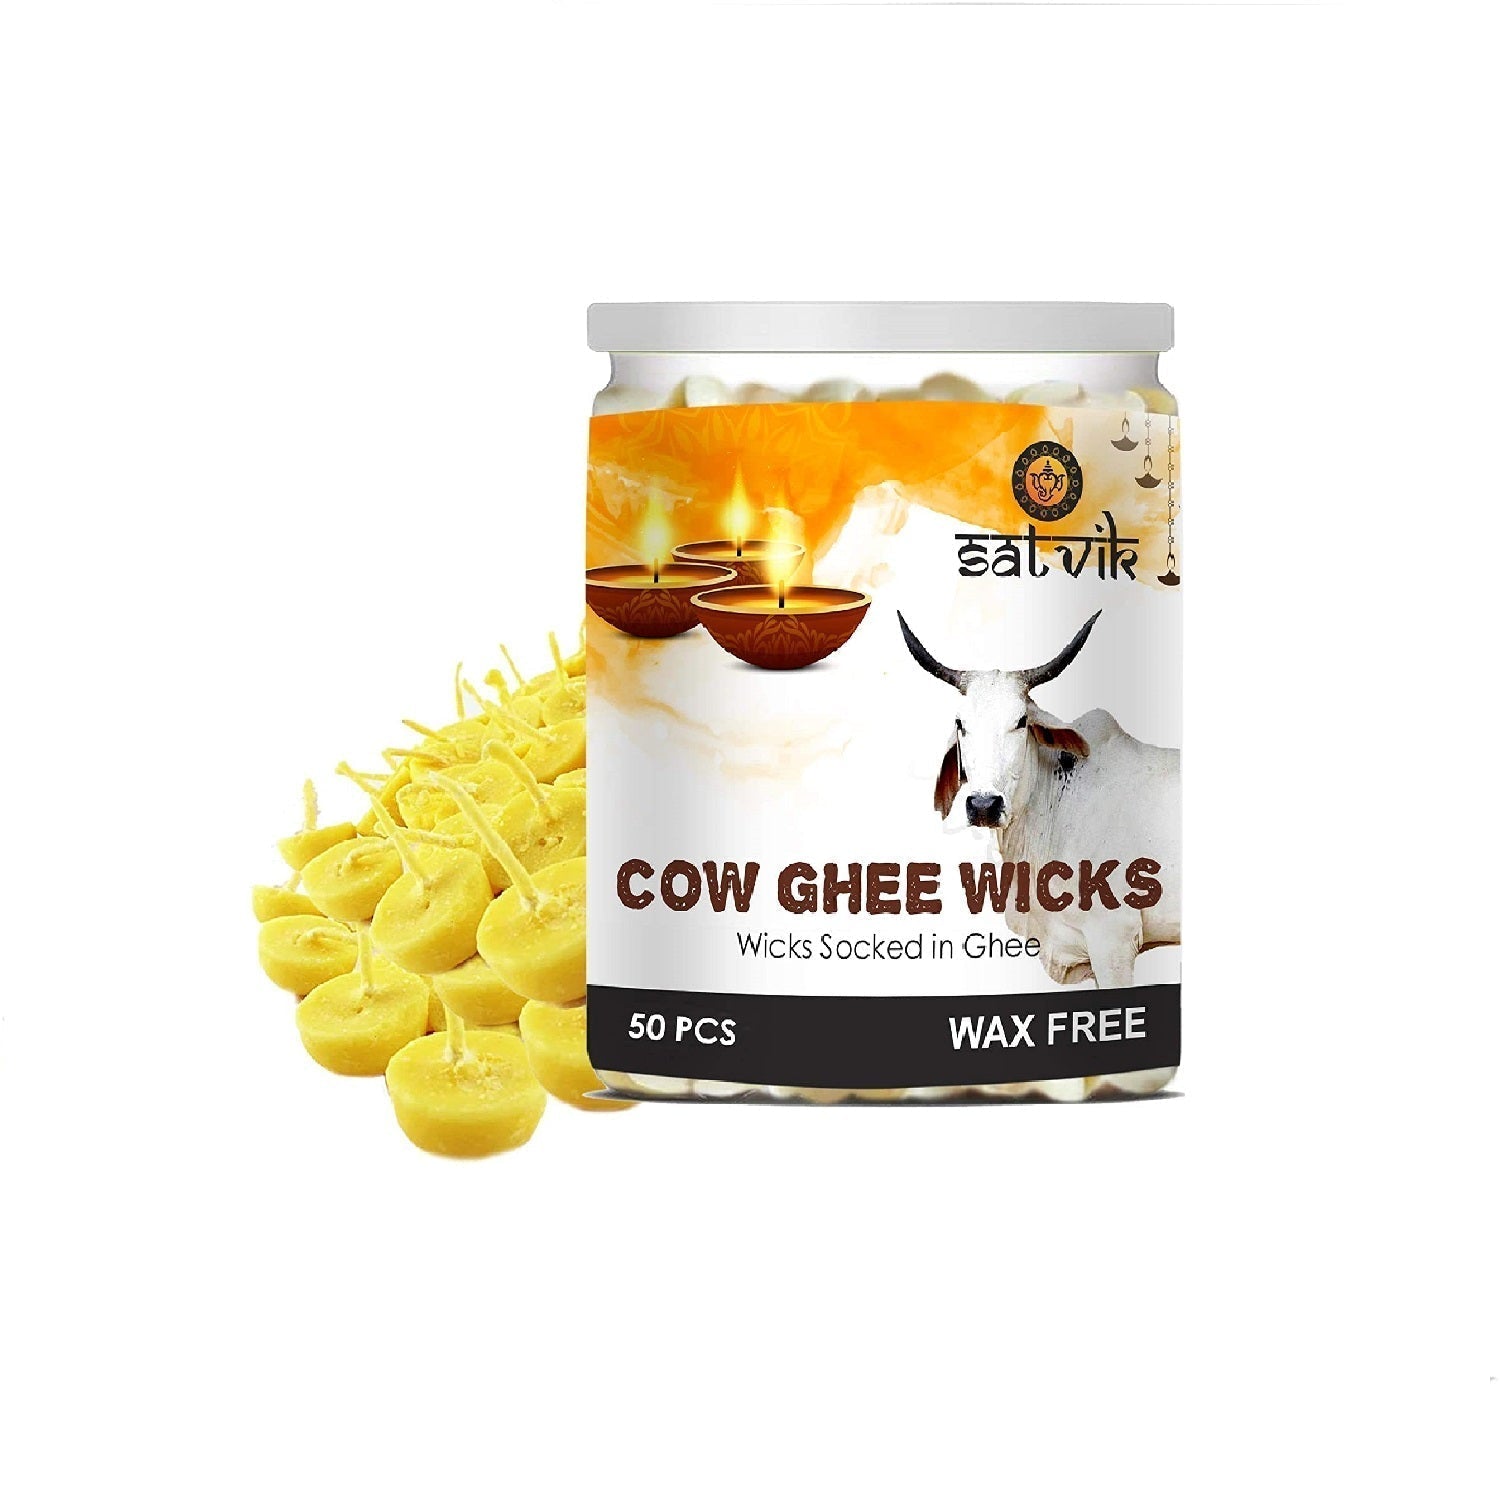 Pure Cow Ghee Wicks (Wax Free)